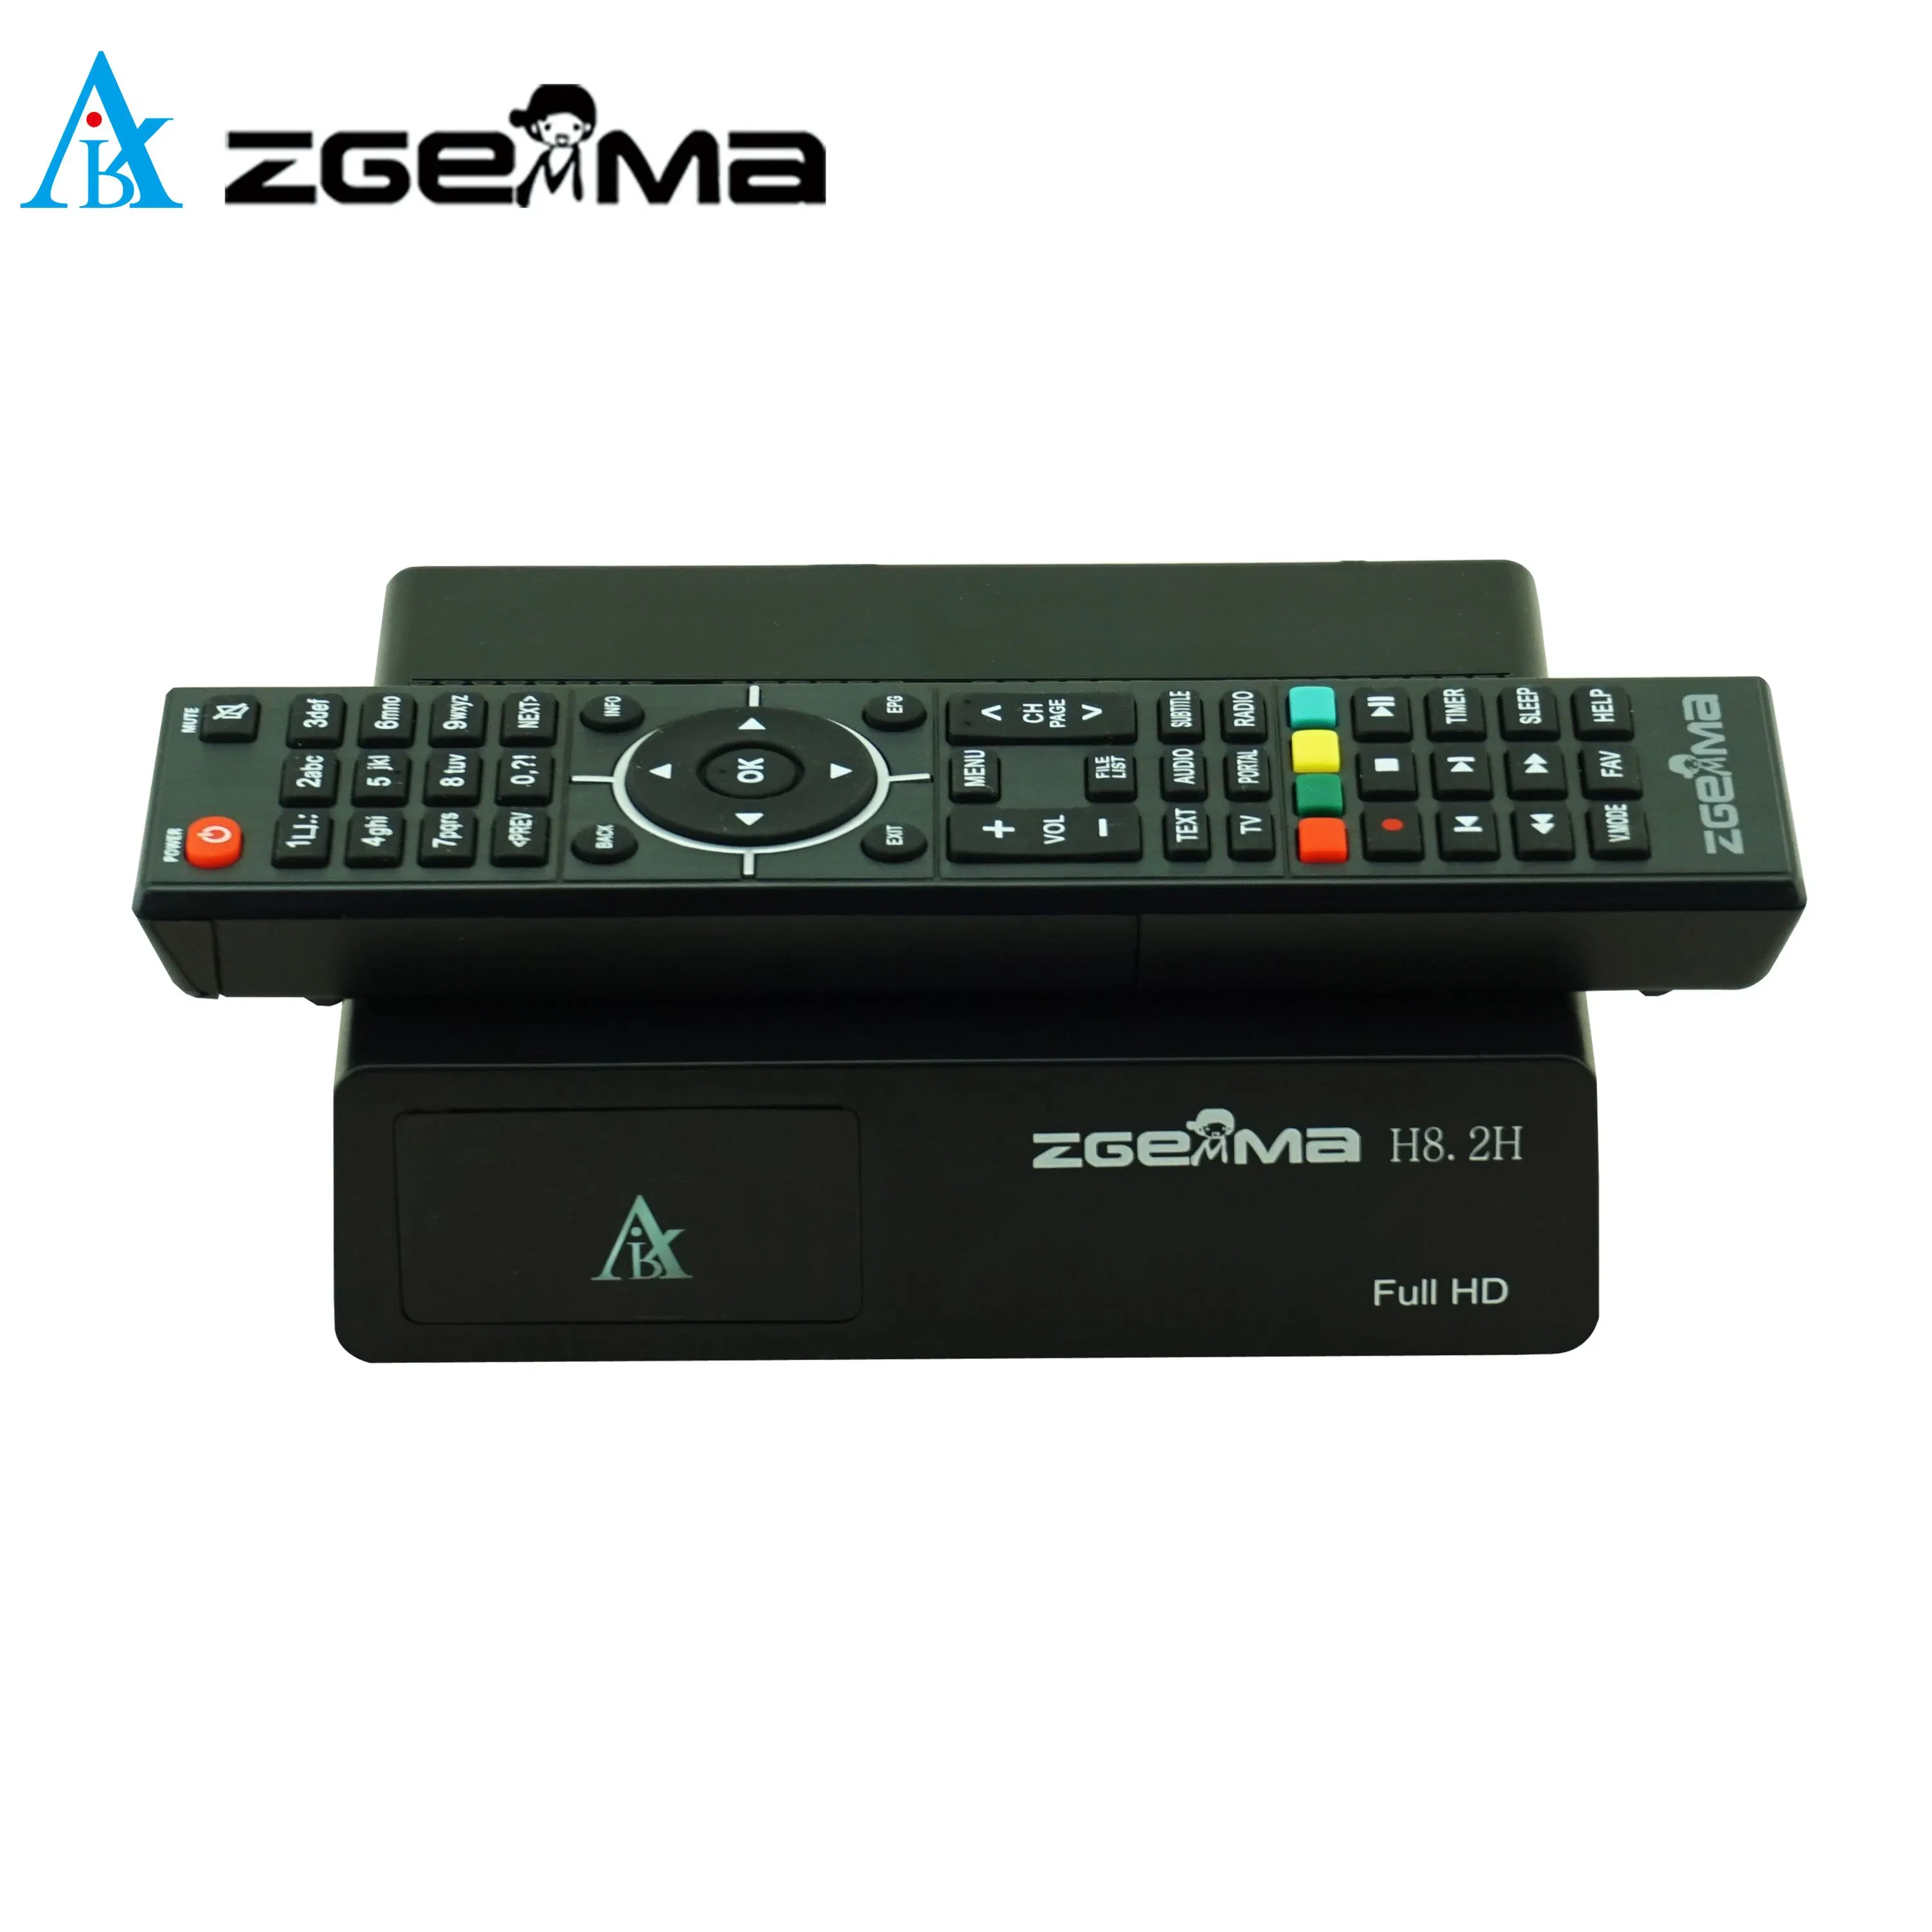 Receptor de TV vía satélite H8.2h Zgemma - Alta definición 1080p de resolución, construido en la DVB-S2X + DVB-T2/C Tuner